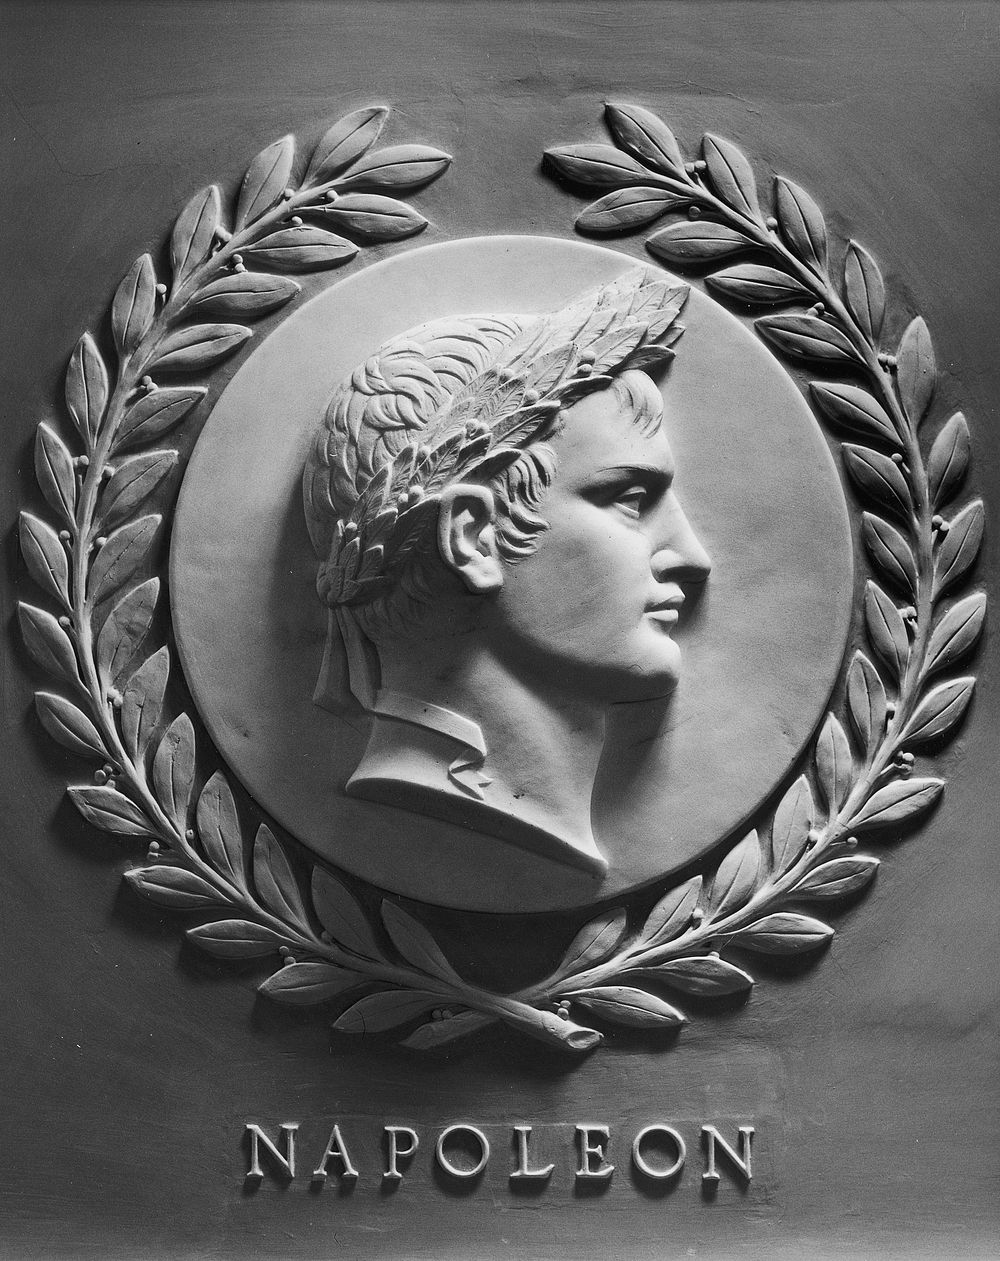 Napoleon I (1769-1821) Emperor of France emblem. Original public domain image from Flickr